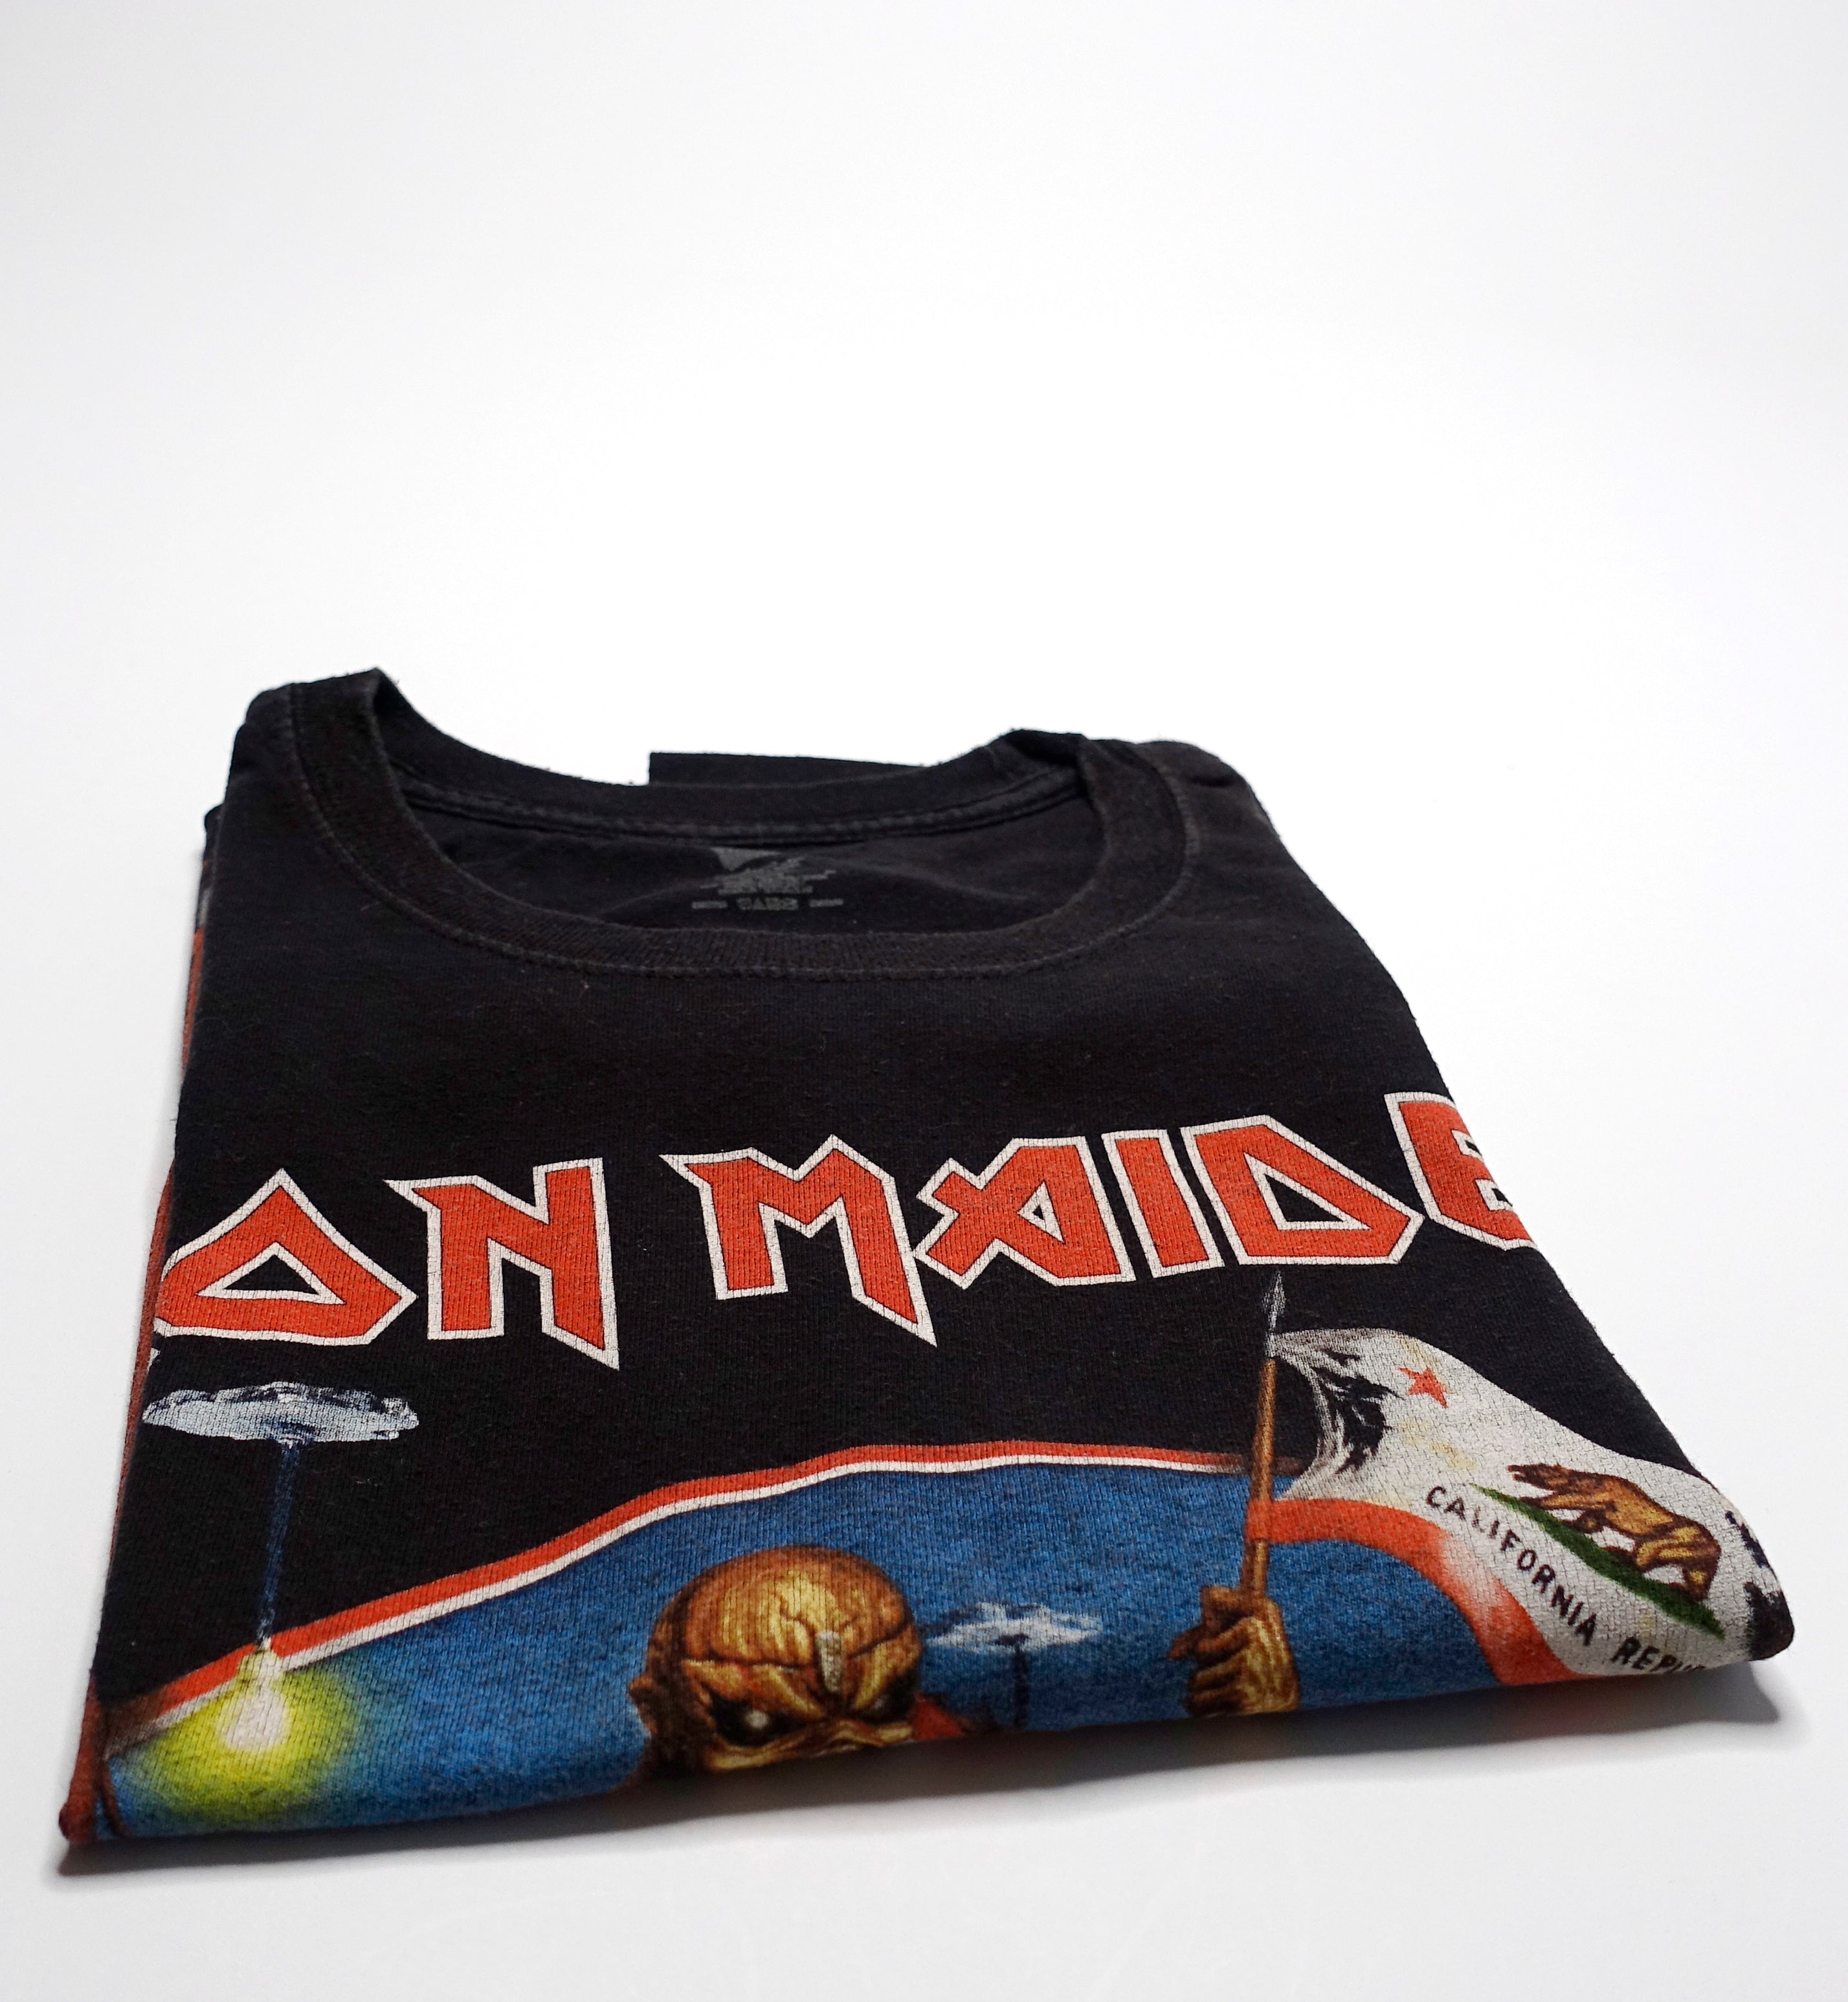 Iron Maiden – Maiden England Tour 2012 Shirt Size Large